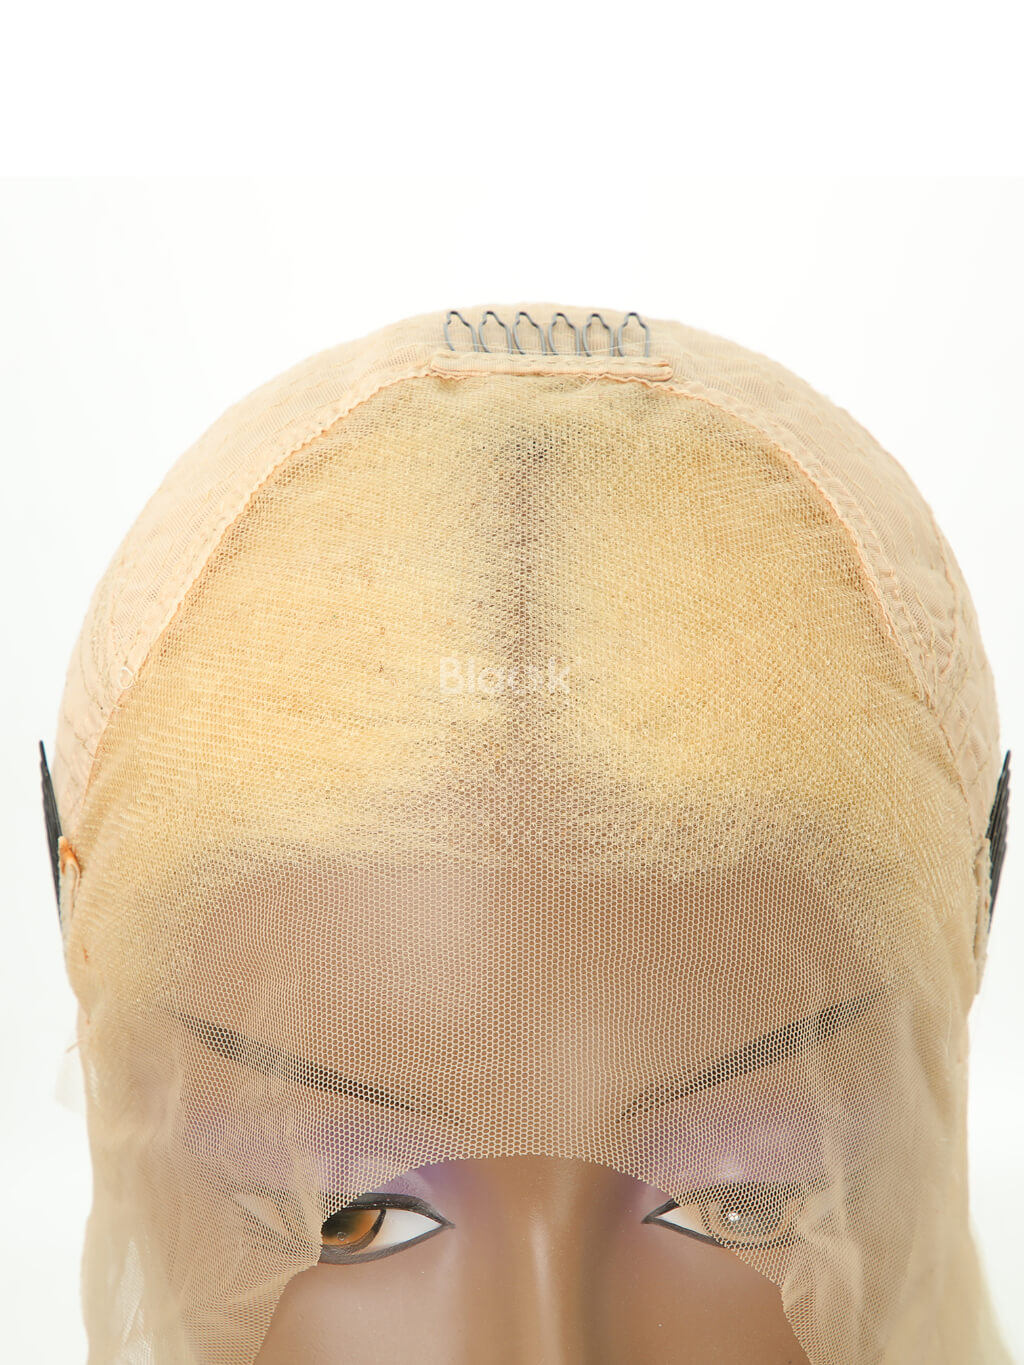 613 bob wig 13x4 transparent lace frontal wig human hair 5